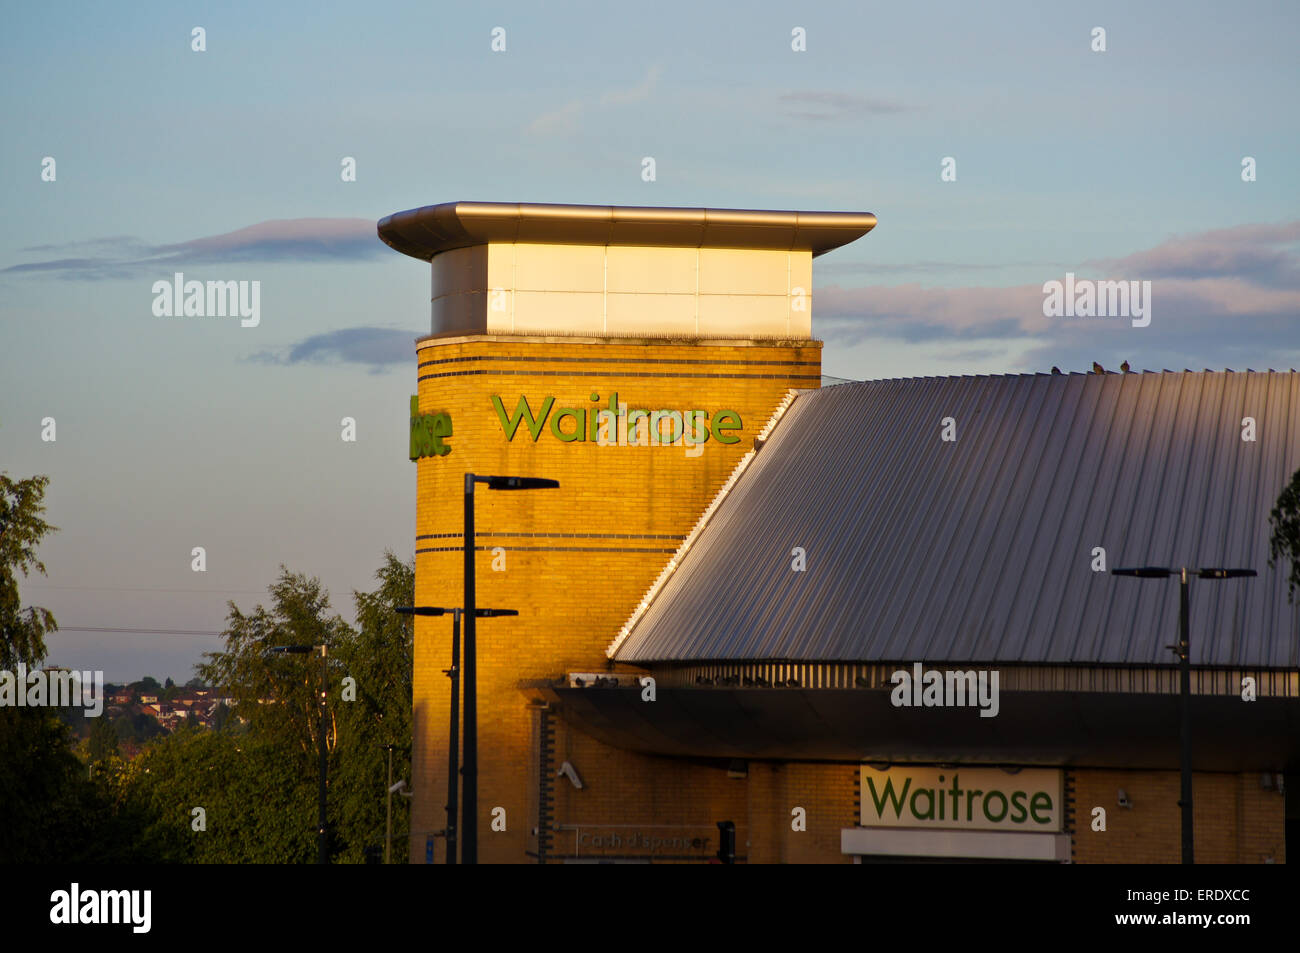 Exterior of Waitrose supermarket at sunset, South Woodford, London, England Stock Photo